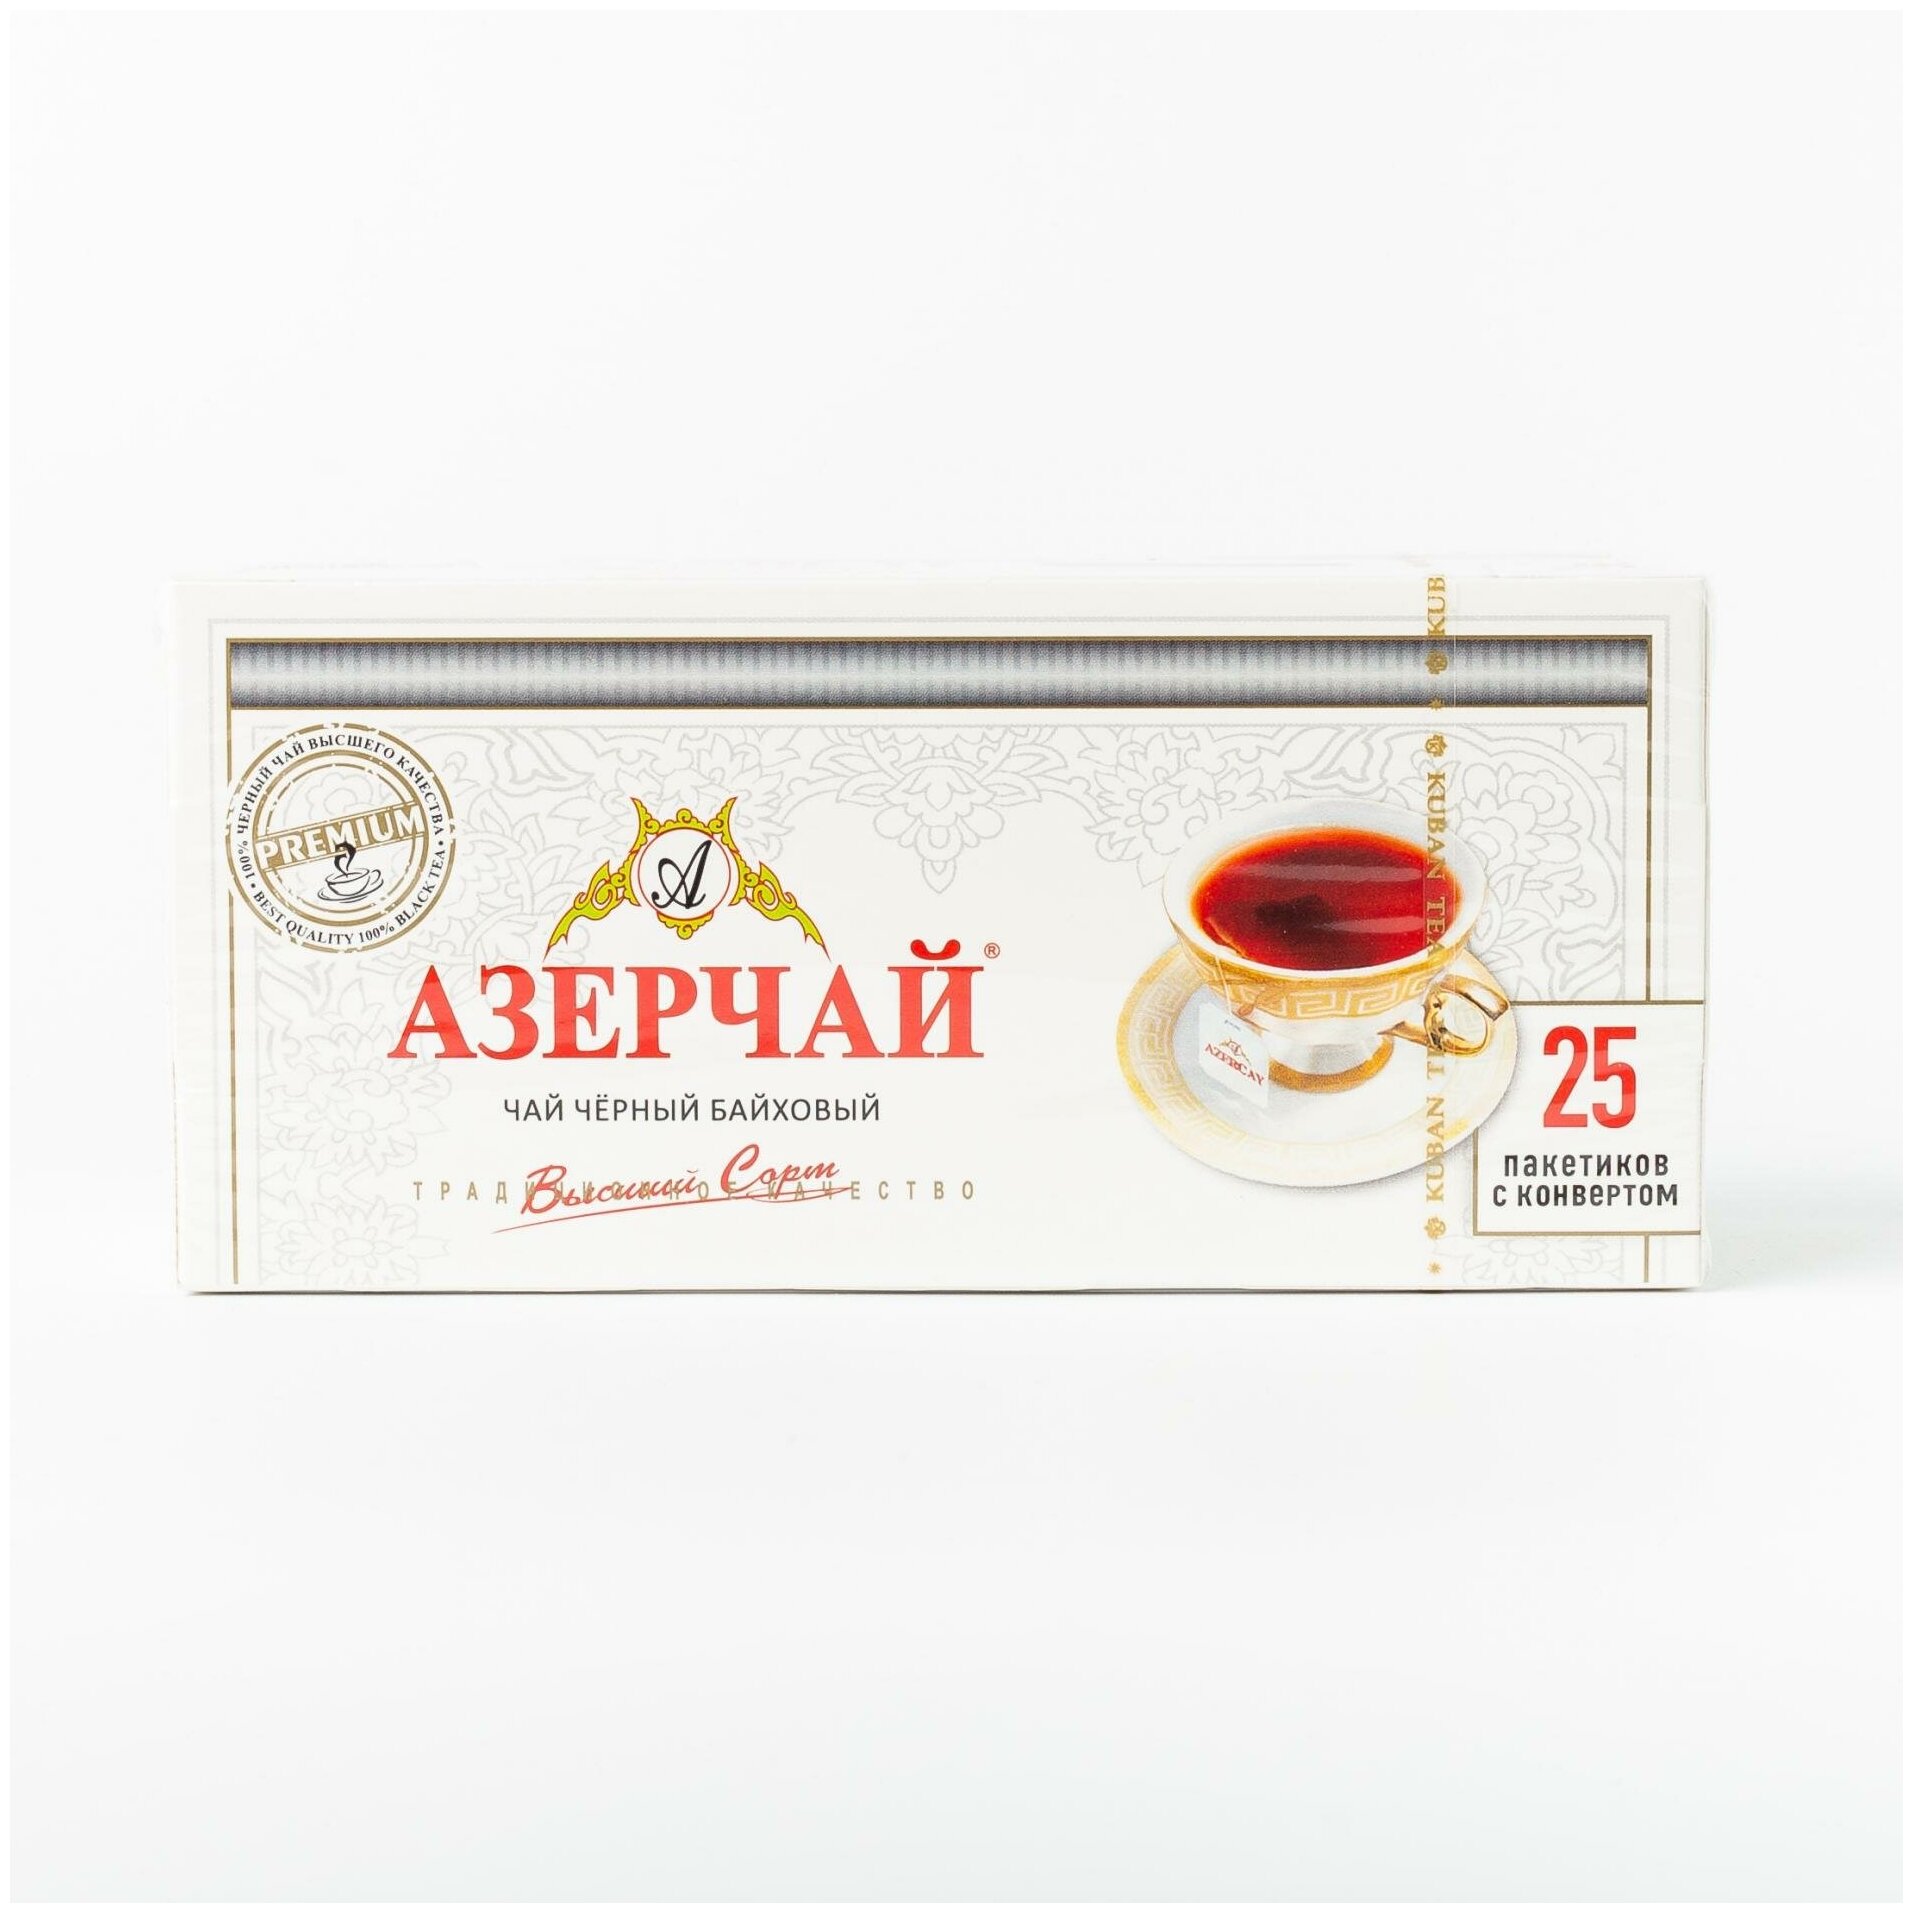 Картинки чай яблоко азерчай